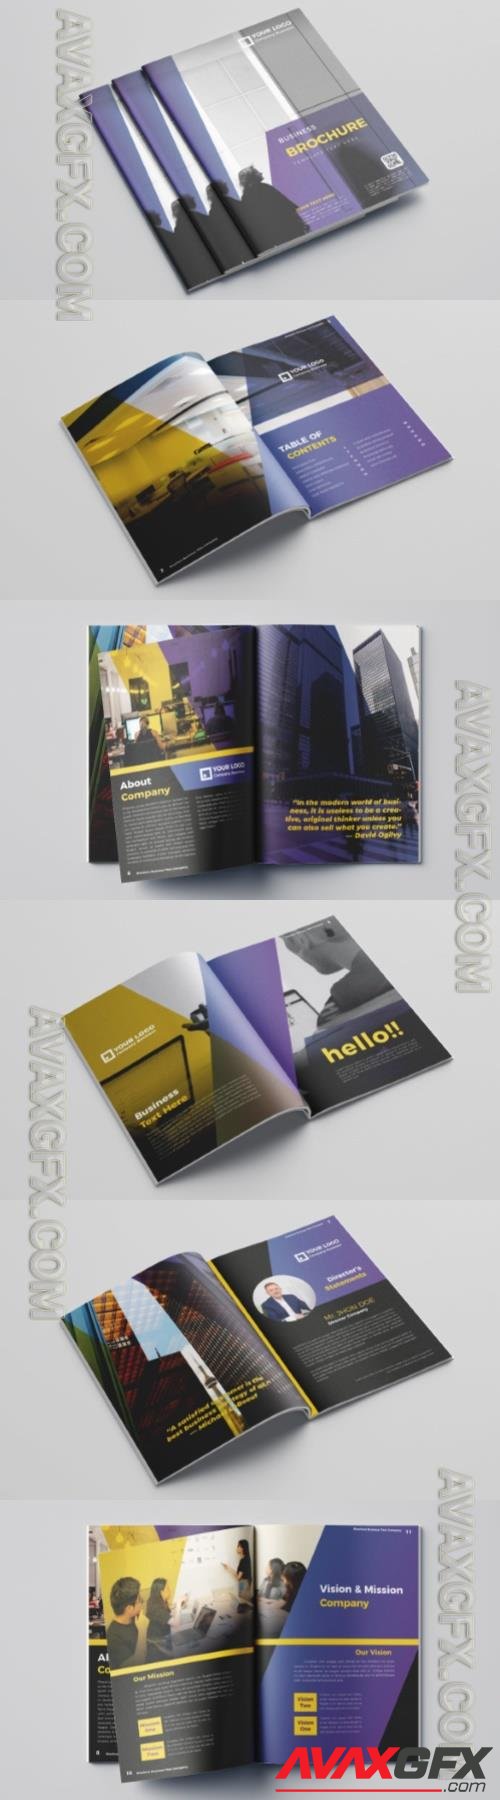 Business Brochure Vol.8 MDYD9WU